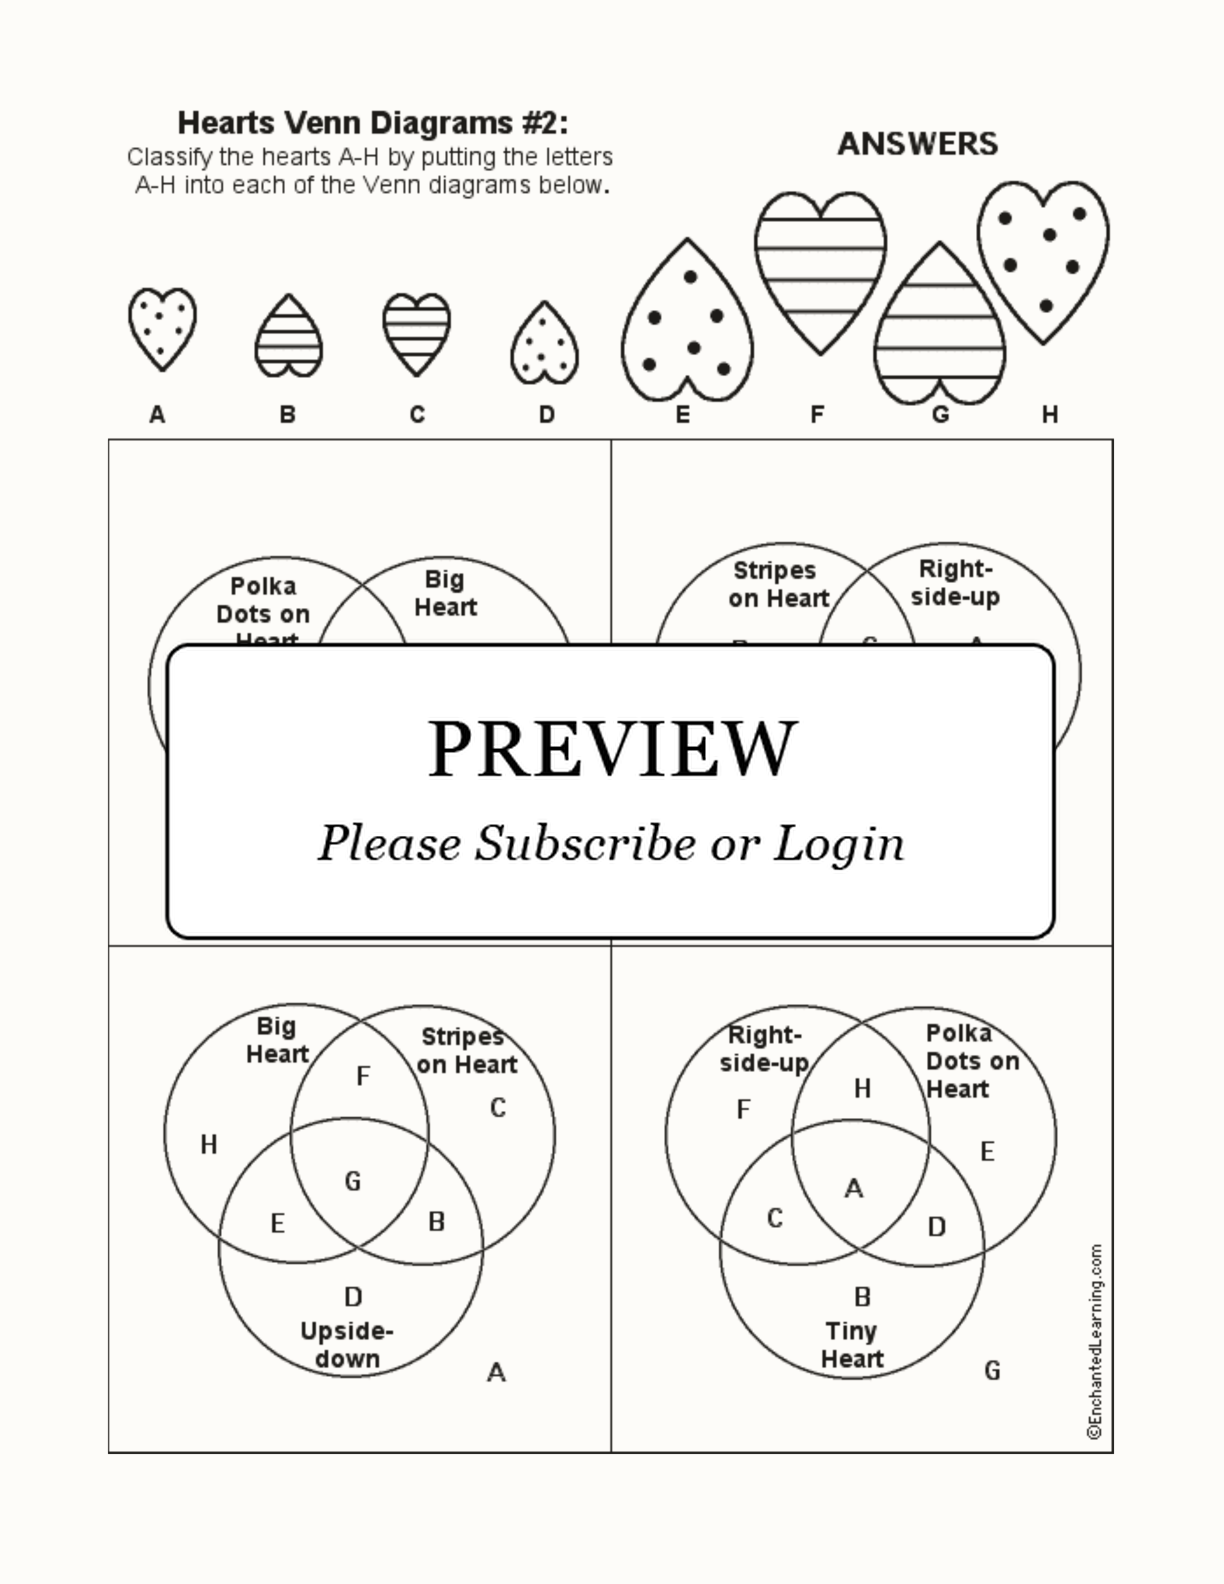 Hearts Venn Diagram #2 interactive worksheet page 2